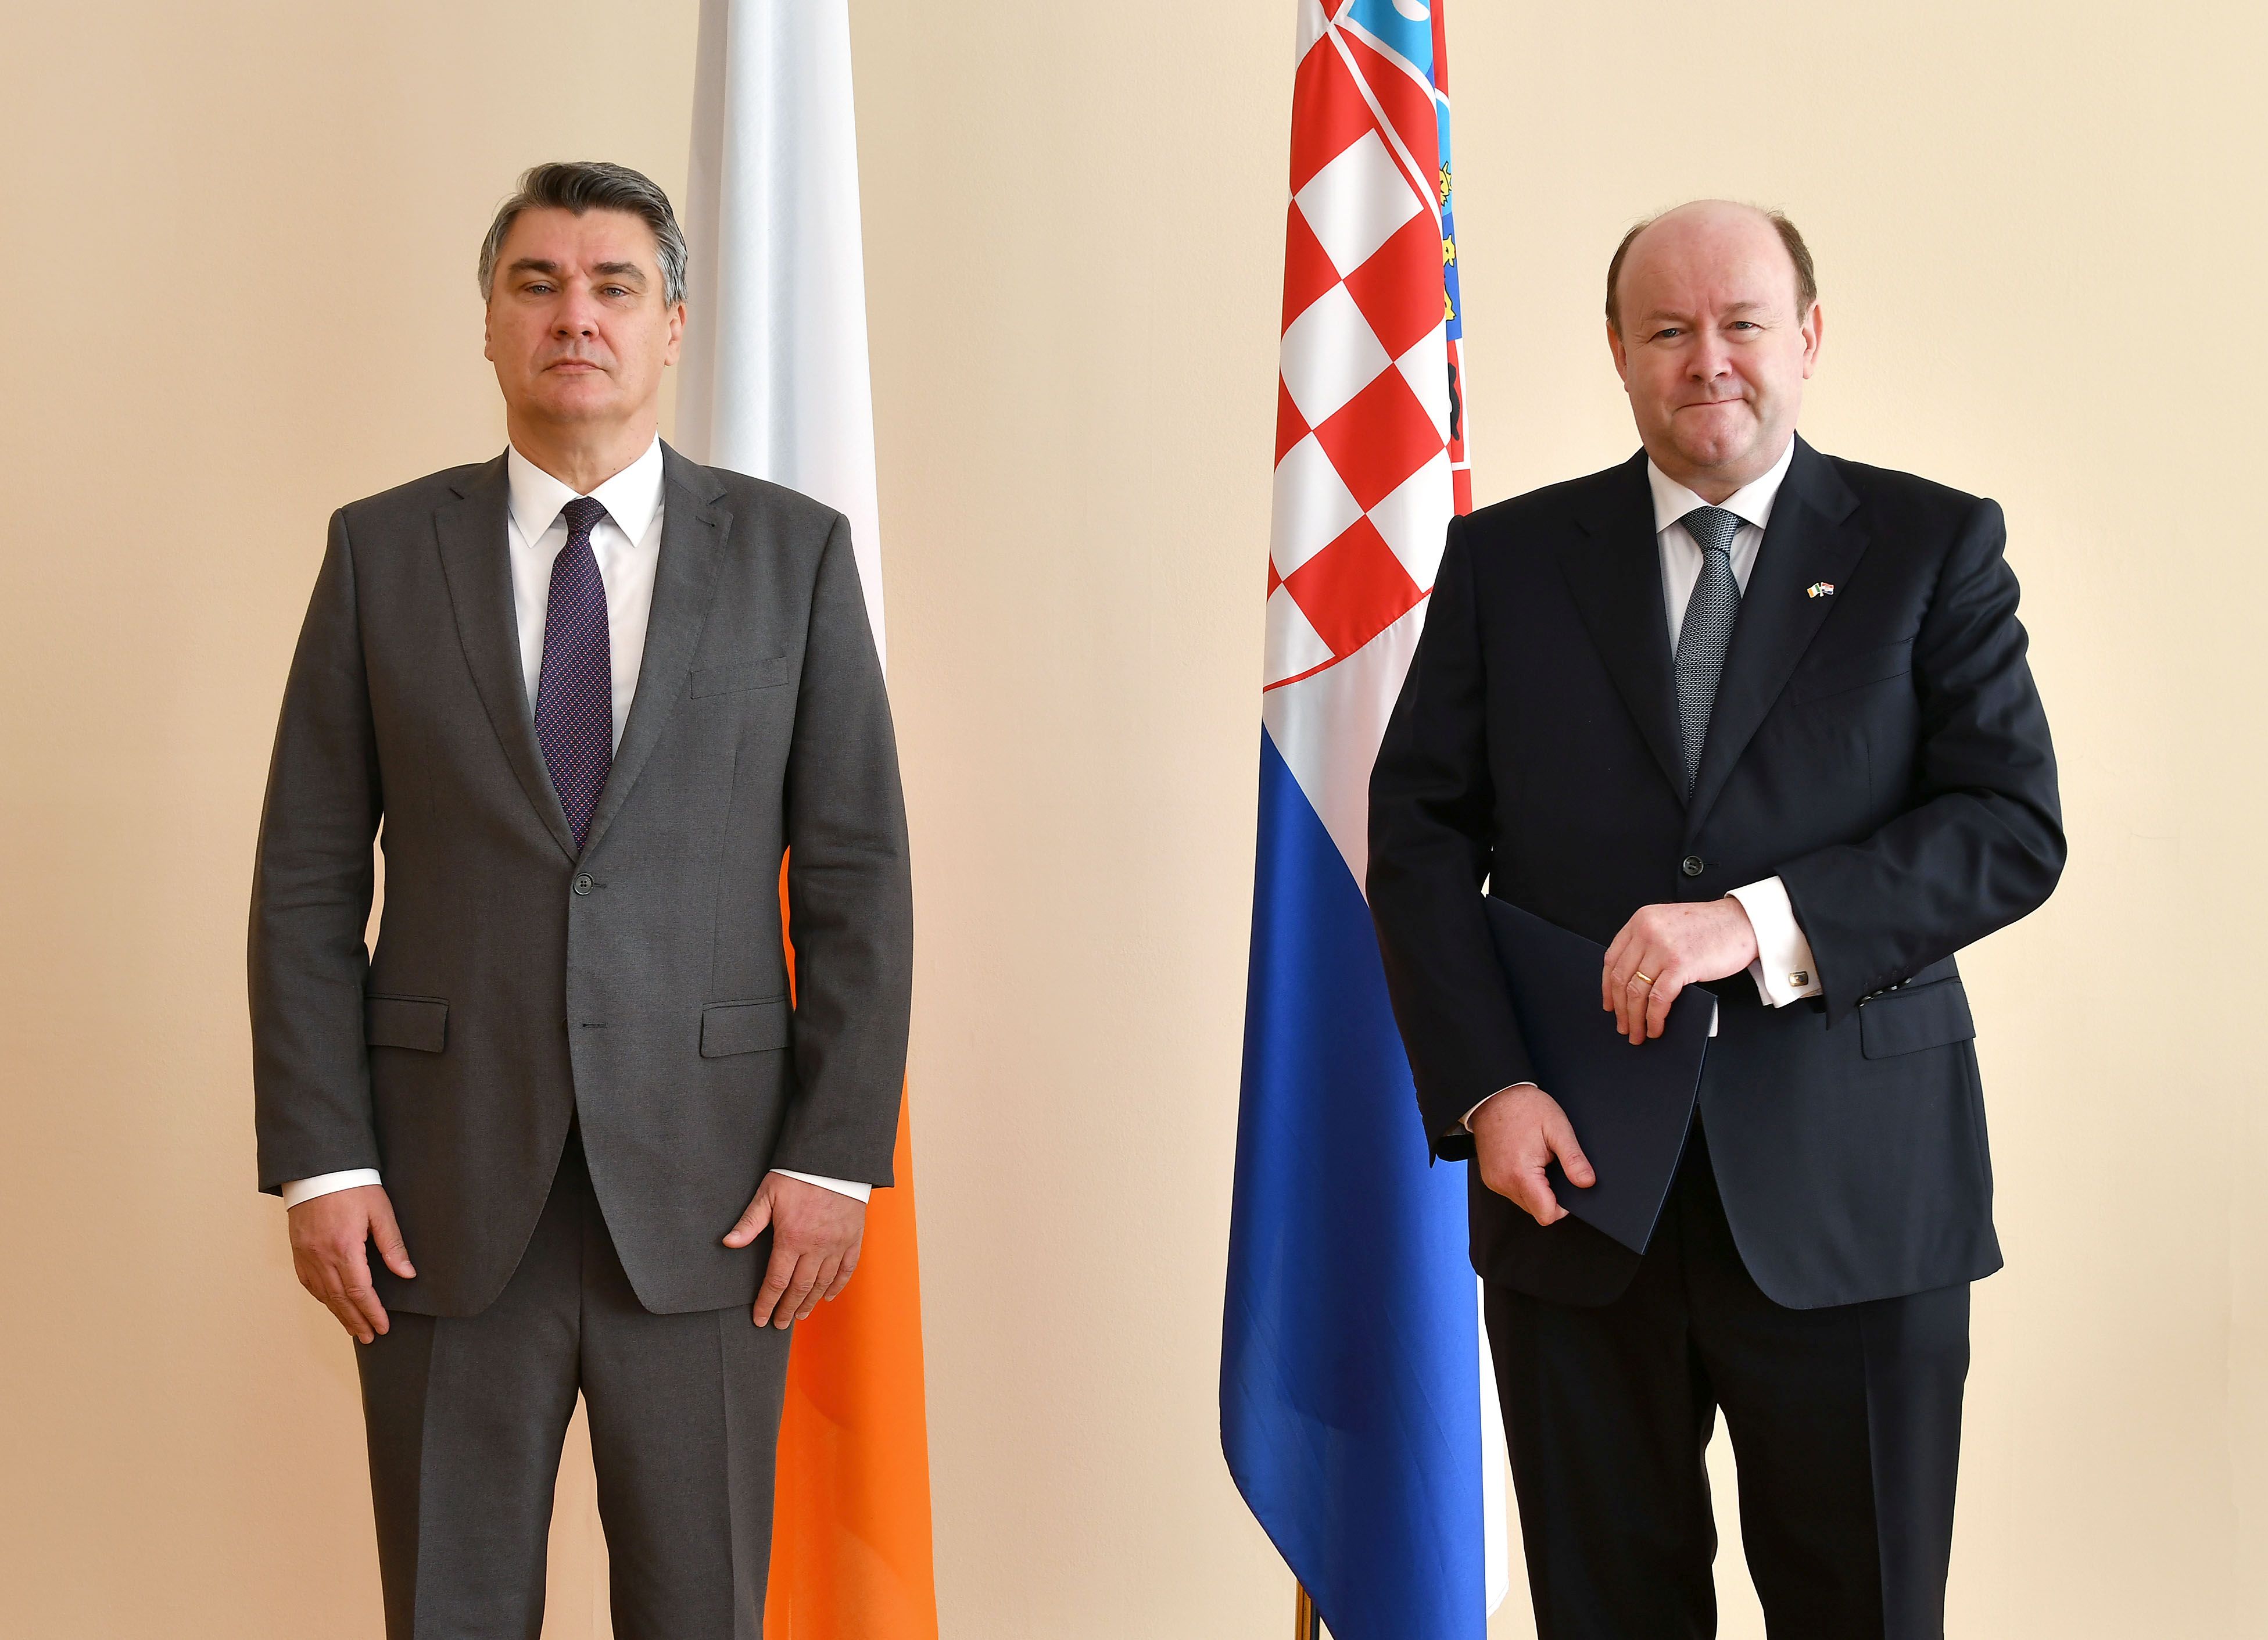 Ambassador Dowling presents credentials to Croatian President Zoran Milanović